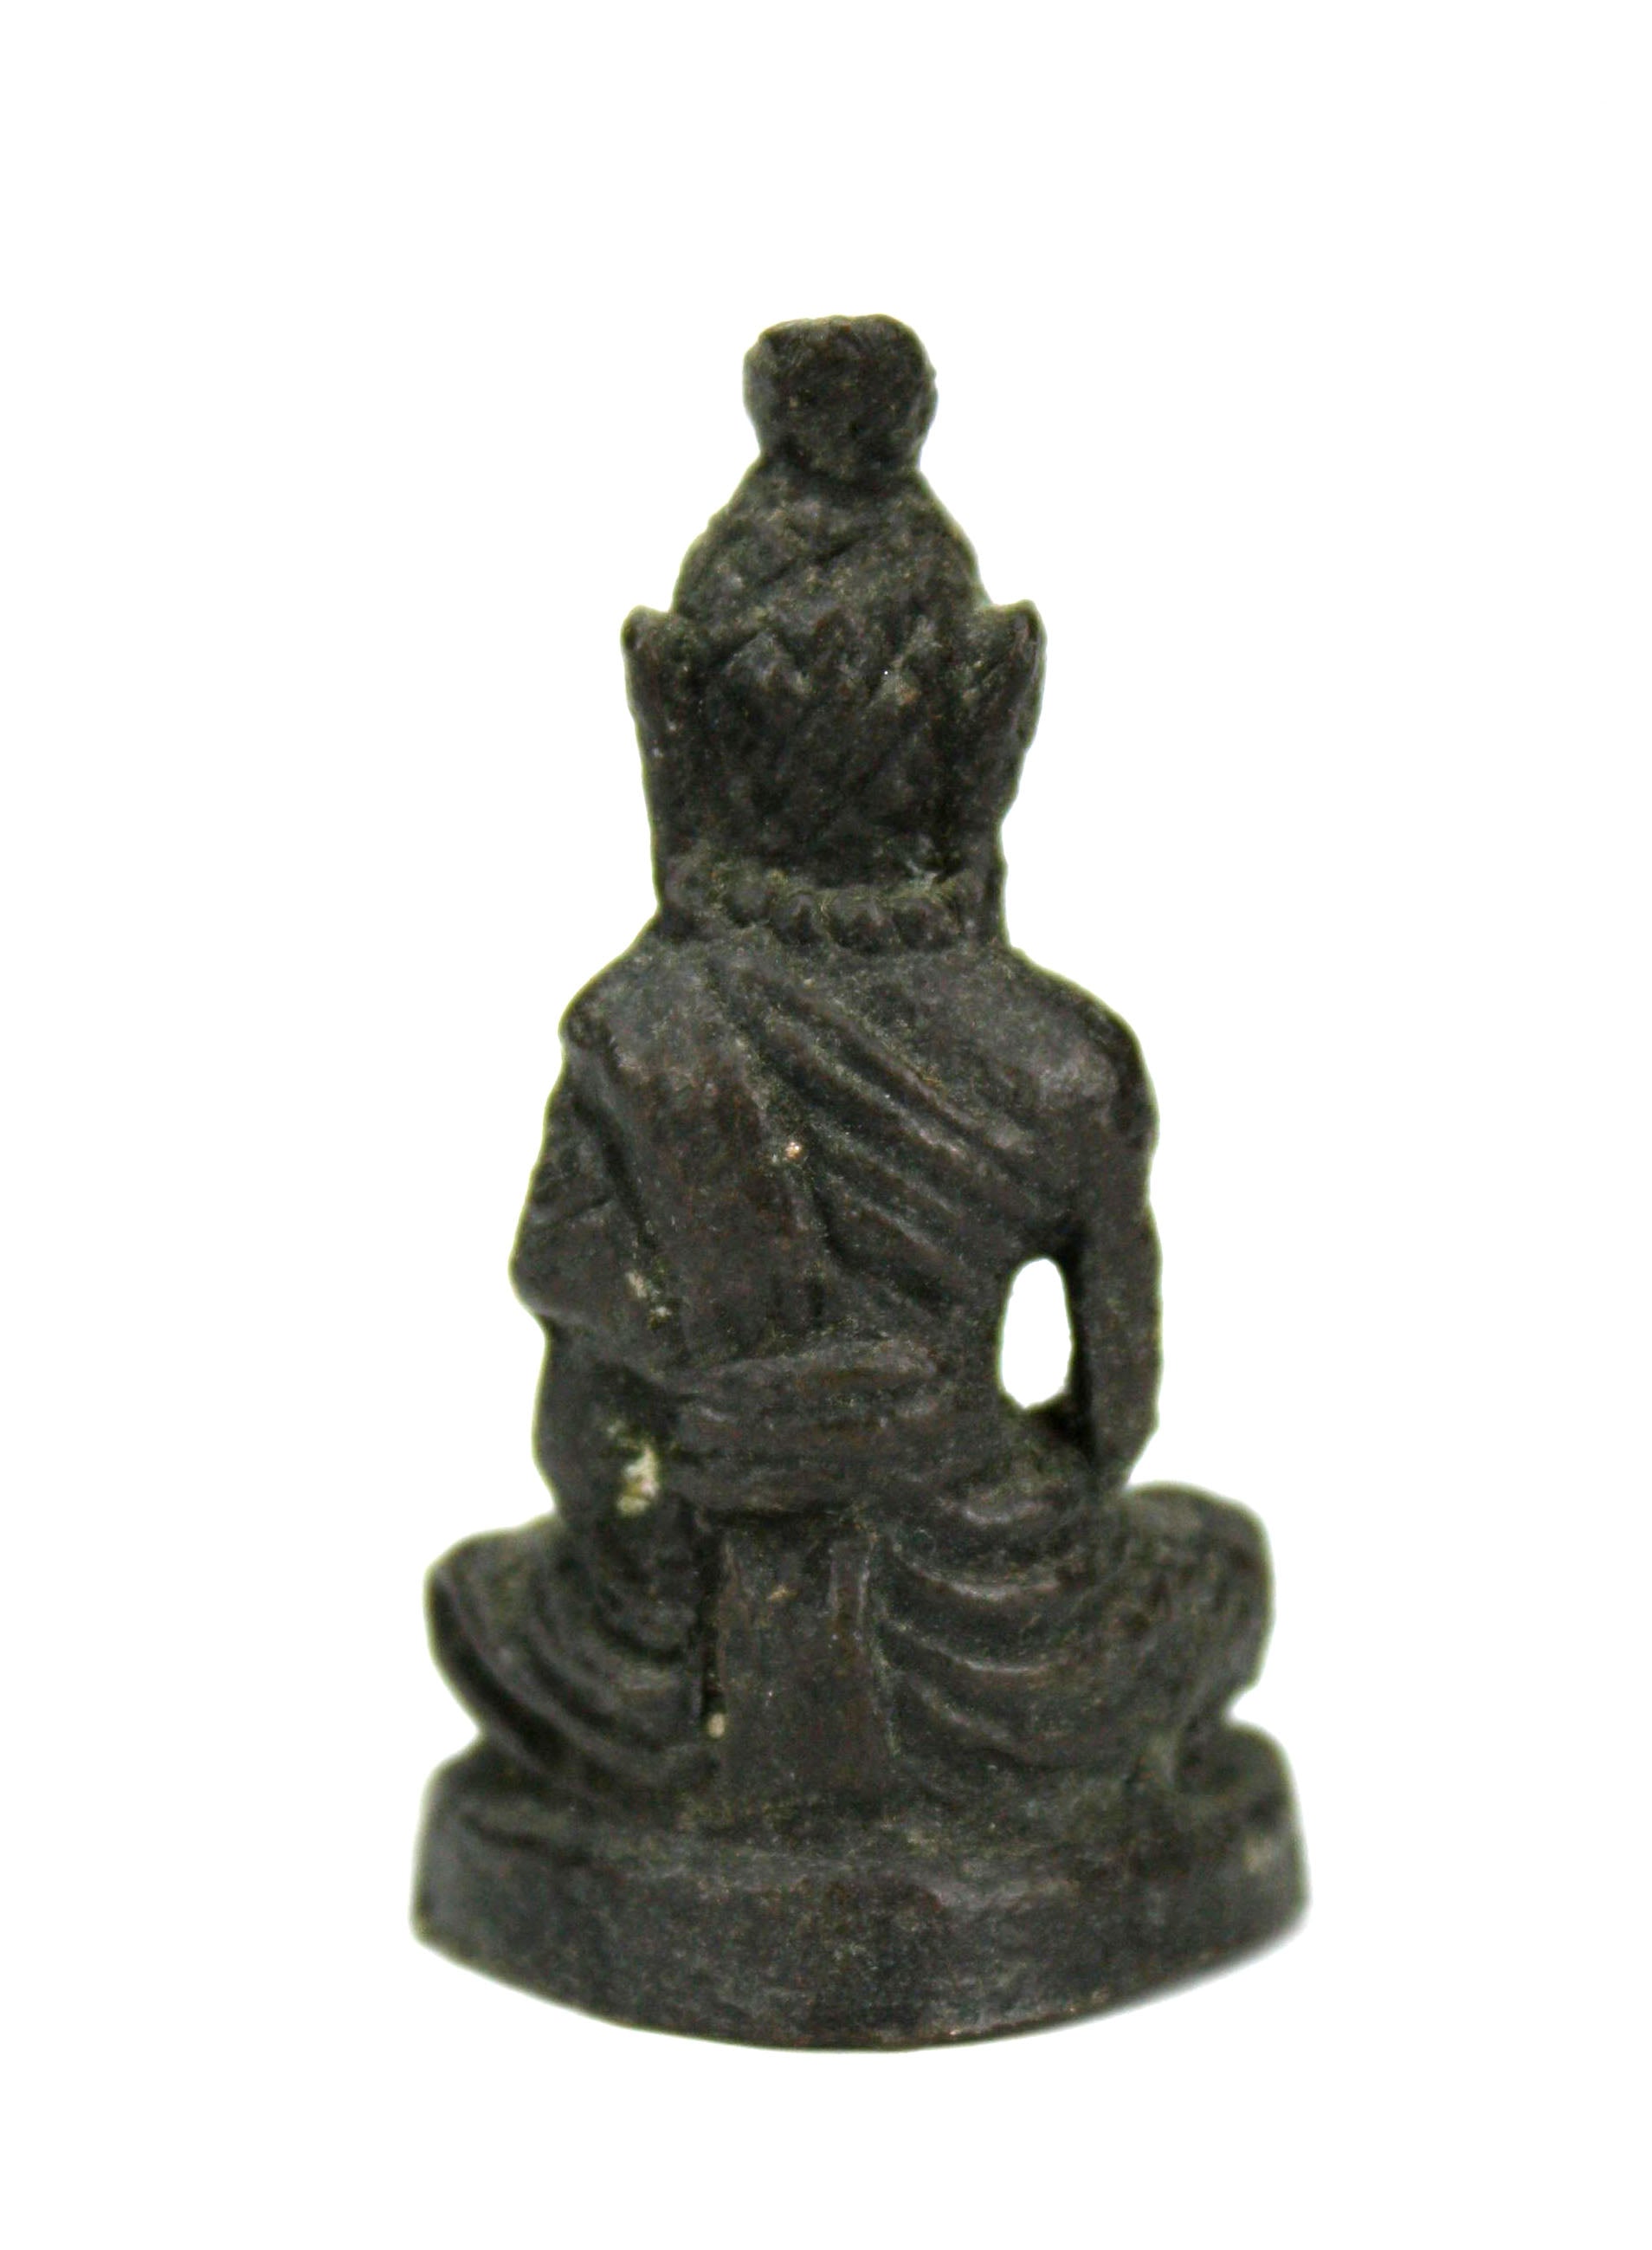 Holy Man Buddhist and Hindu Votive Amulet - 3.7cm high, Product Code GS. Statue - farangshop-co